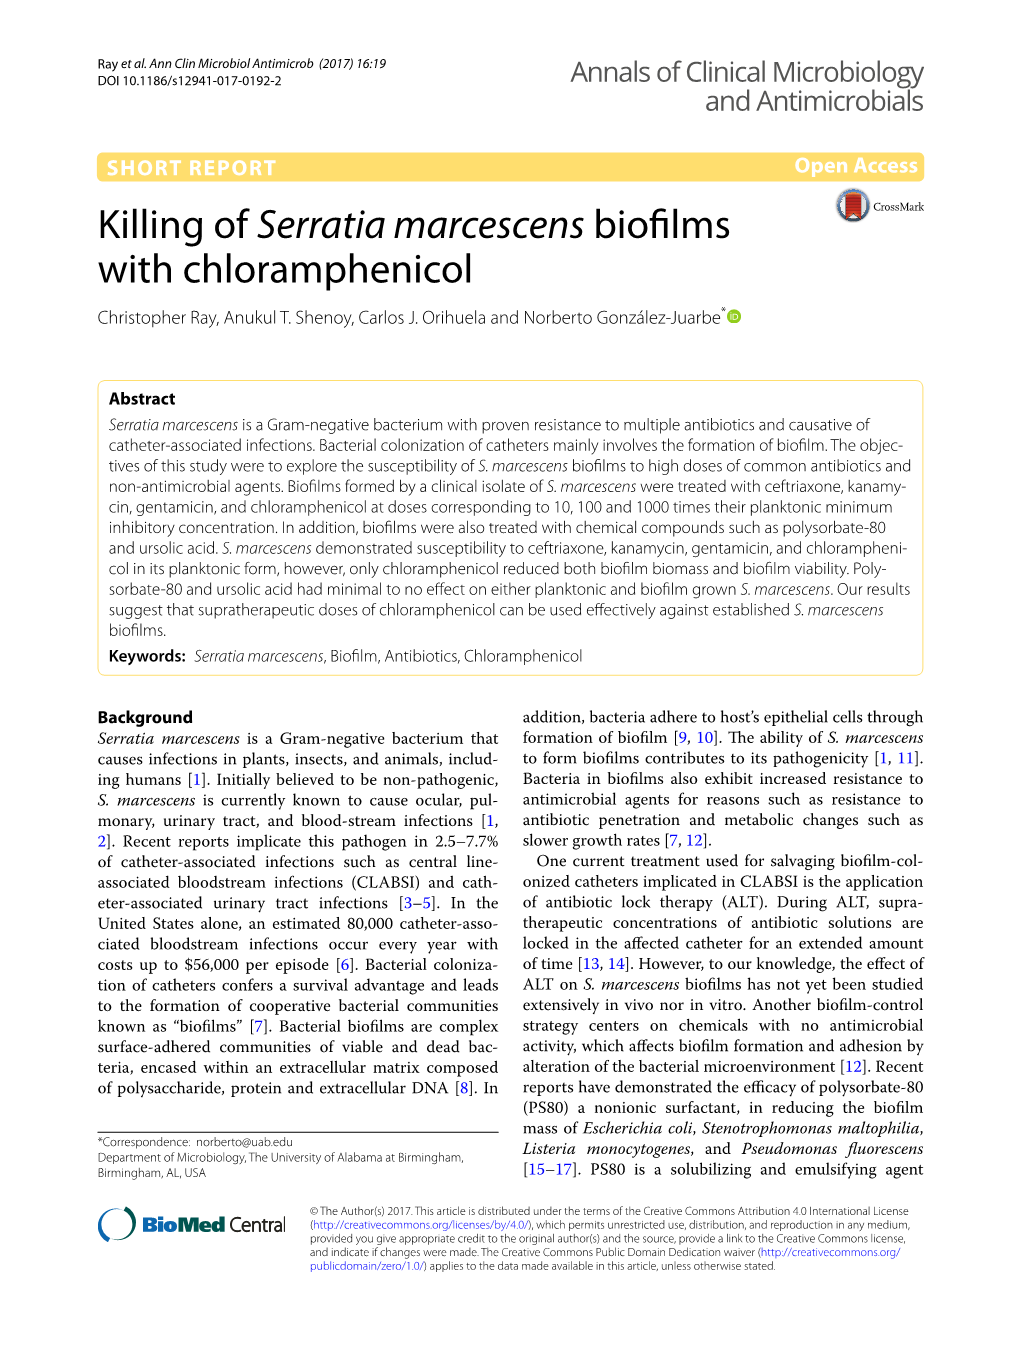 Killing of Serratia Marcescens Biofilms with Chloramphenicol Christopher Ray, Anukul T